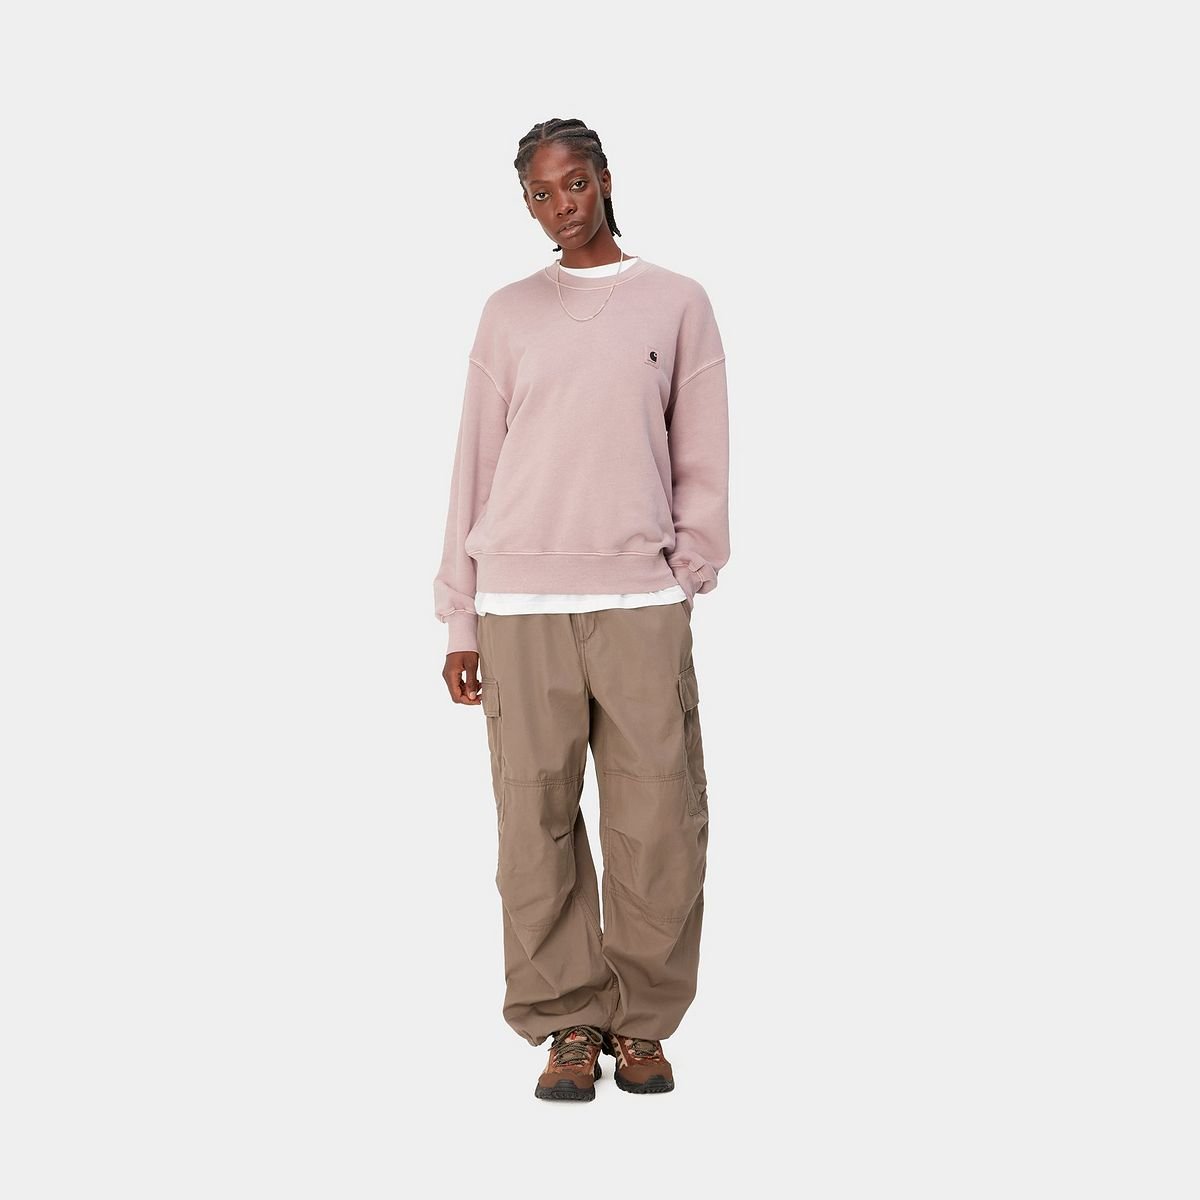 Nelson Sweatshirt "Glassy Pink garment dyed"